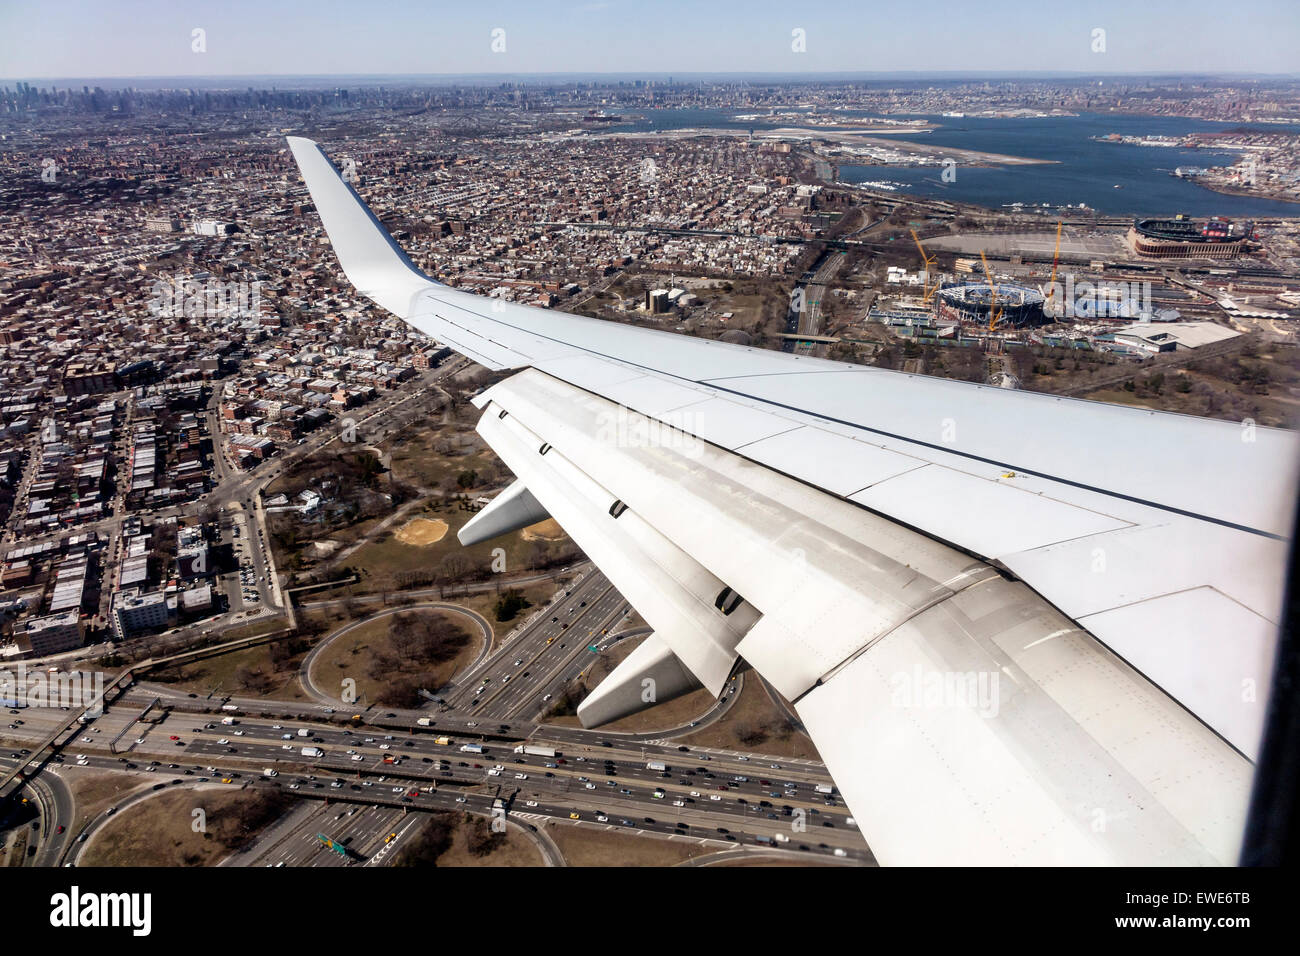 New York City, NY NYC, Northeast, Brooklyn, Luftaufnahme von oben, American Airlines, Verkehrsflugzeug Flugzeug Flugzeug Flugzeug, Flugzeug, Stockfoto